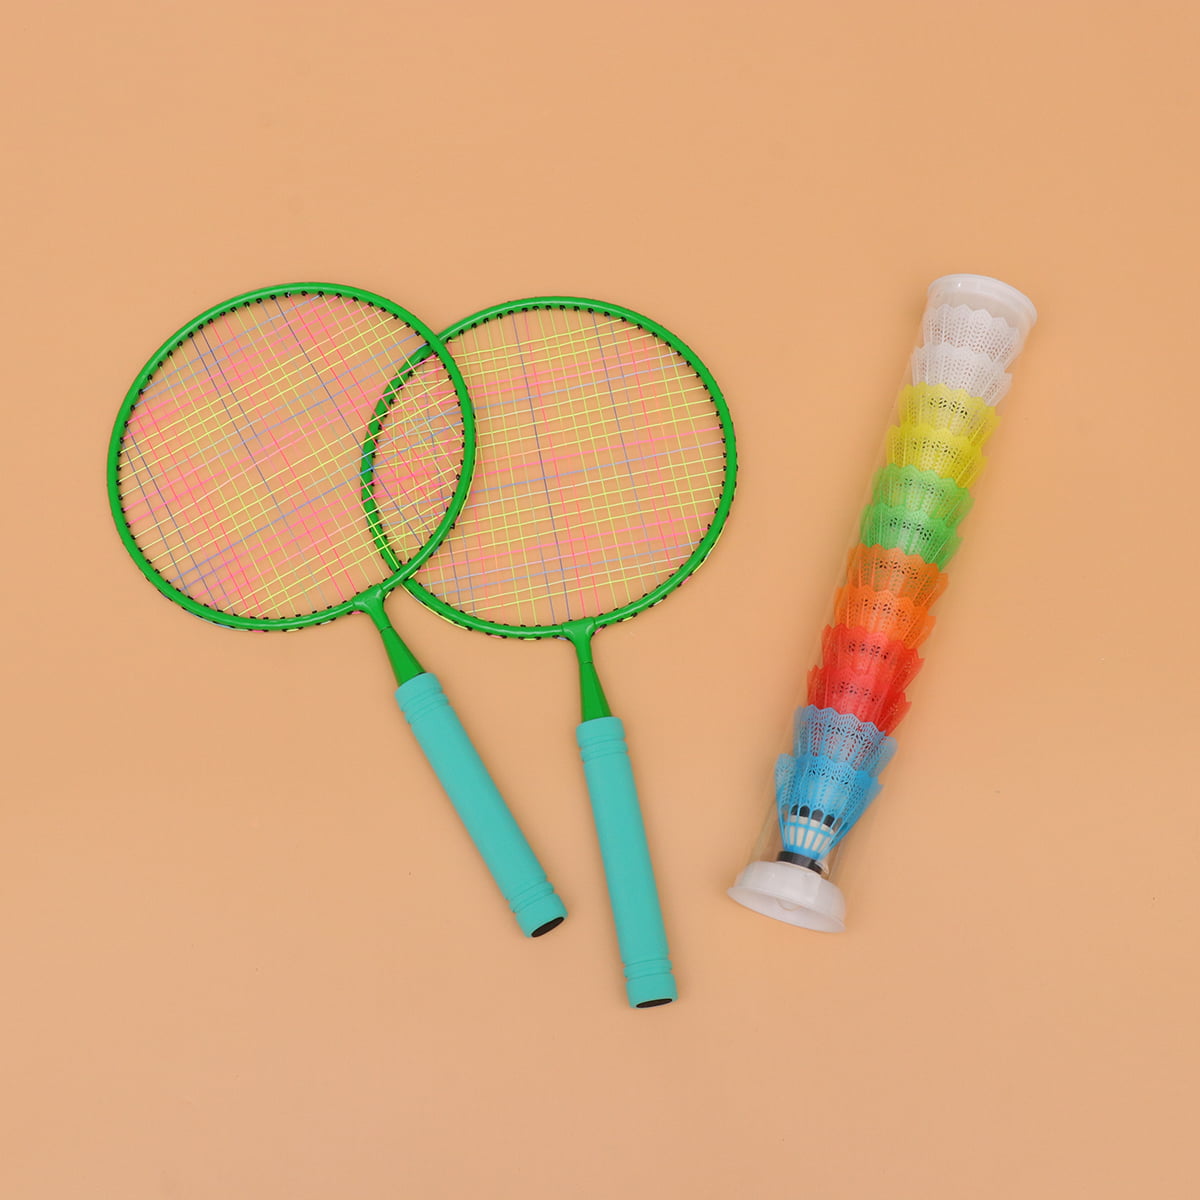 Details about   Badminton Rackets 